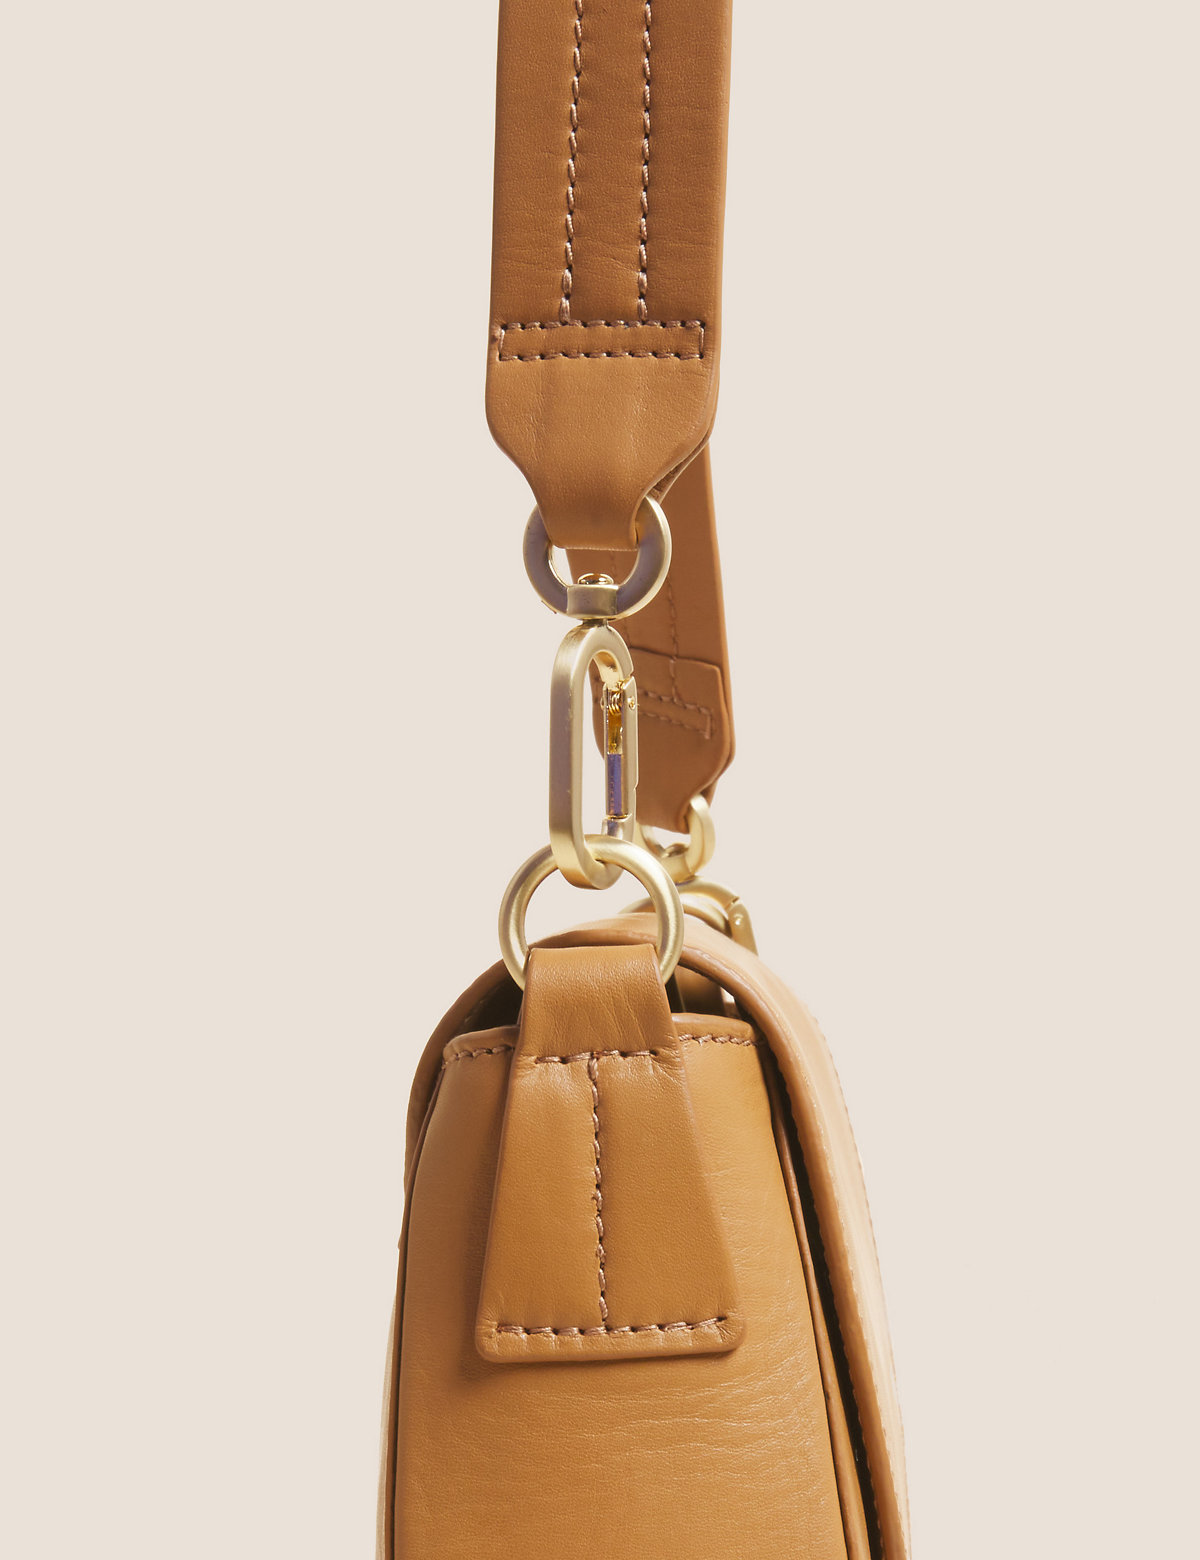 The Leather Saddle Bag